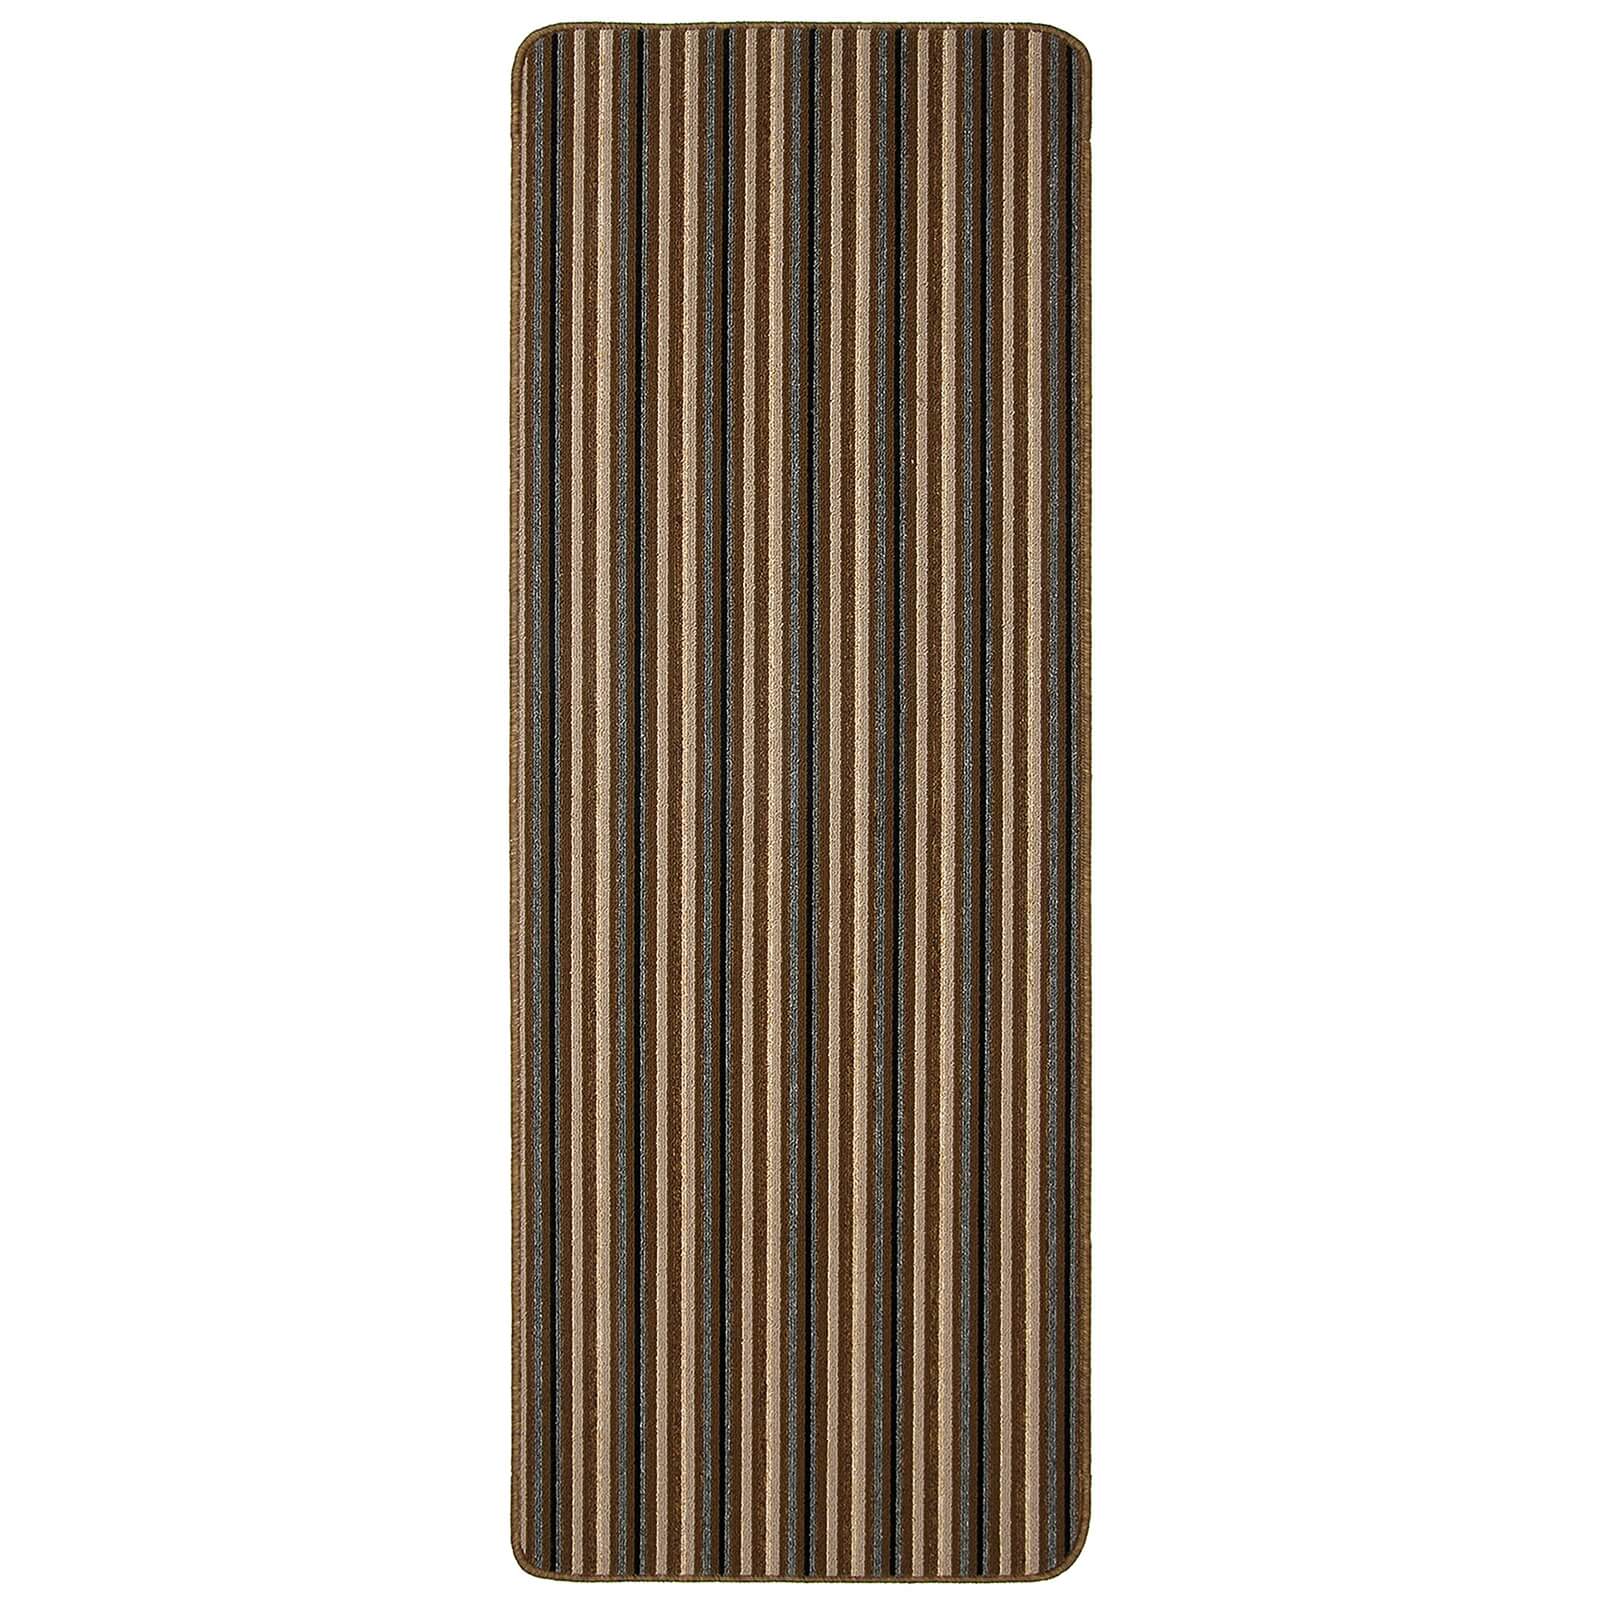 Java Washable Stripe Runner - Chocolate - 67x240cm